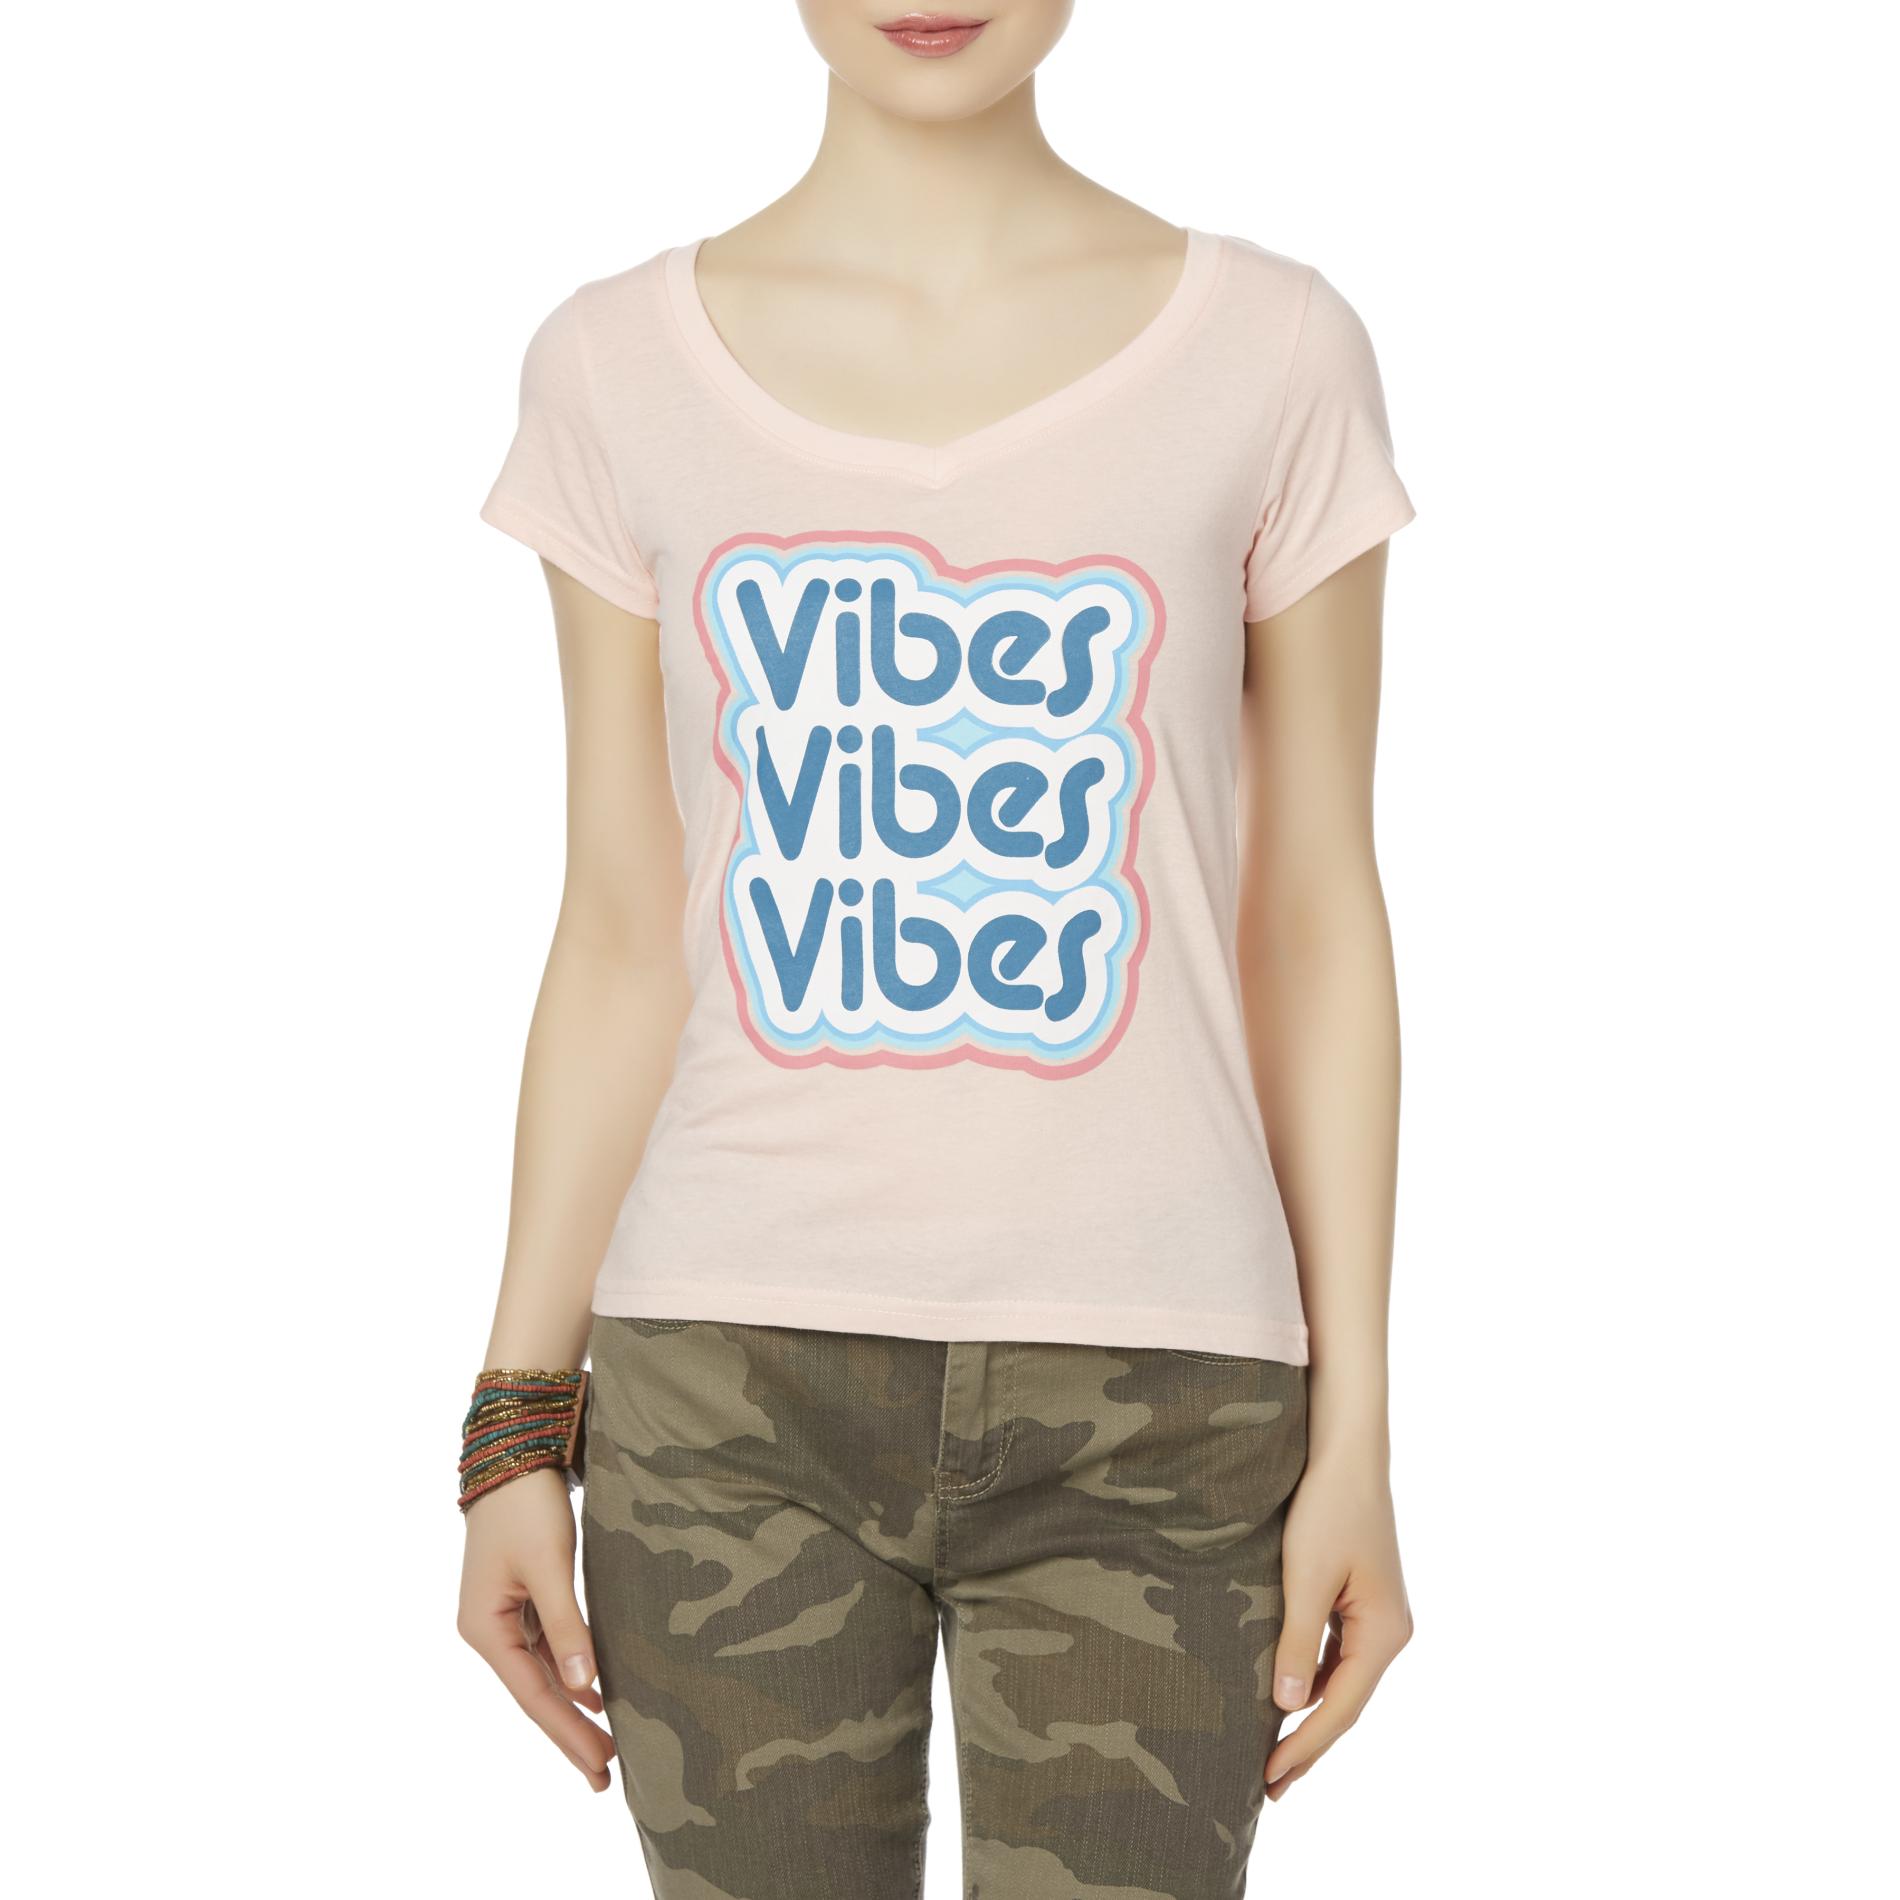 Joe Boxer Juniors' Graphic T-Shirt - Vibes, Vibes, Vibes